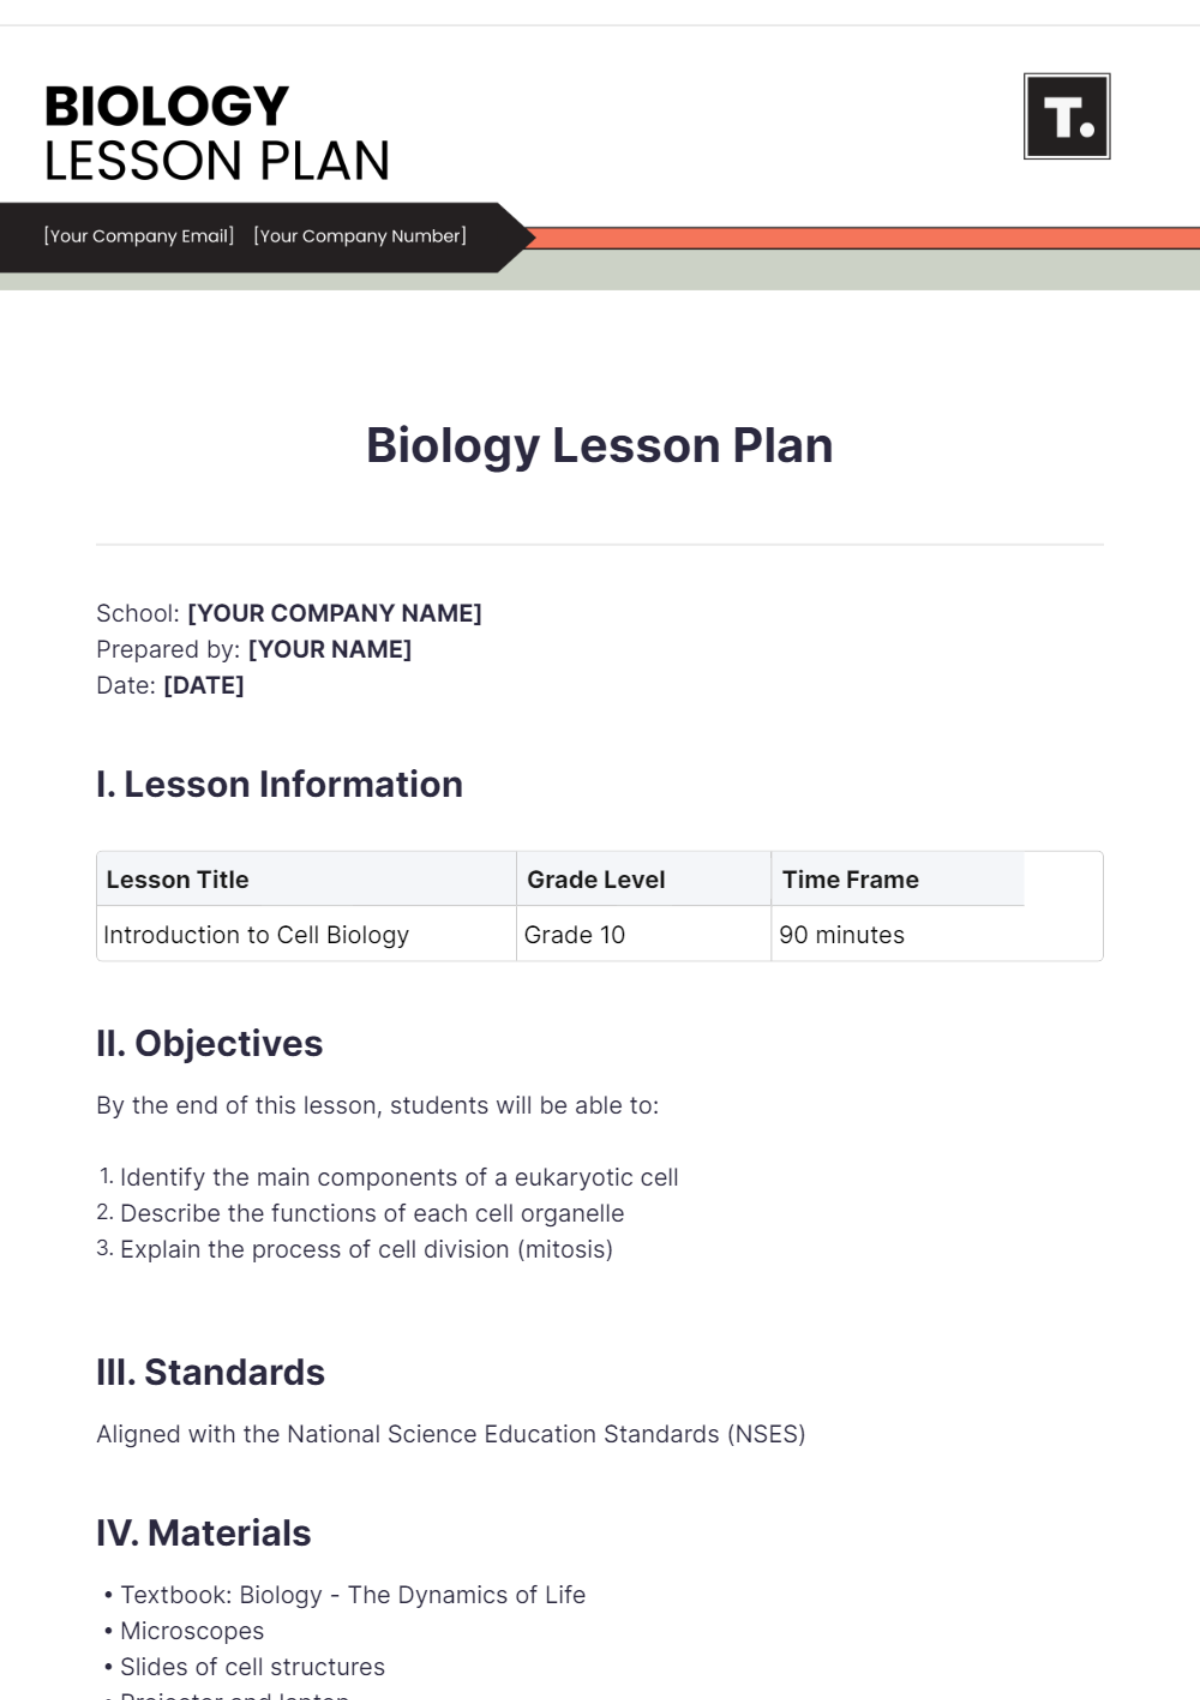 Free Biology Lesson Plan Template